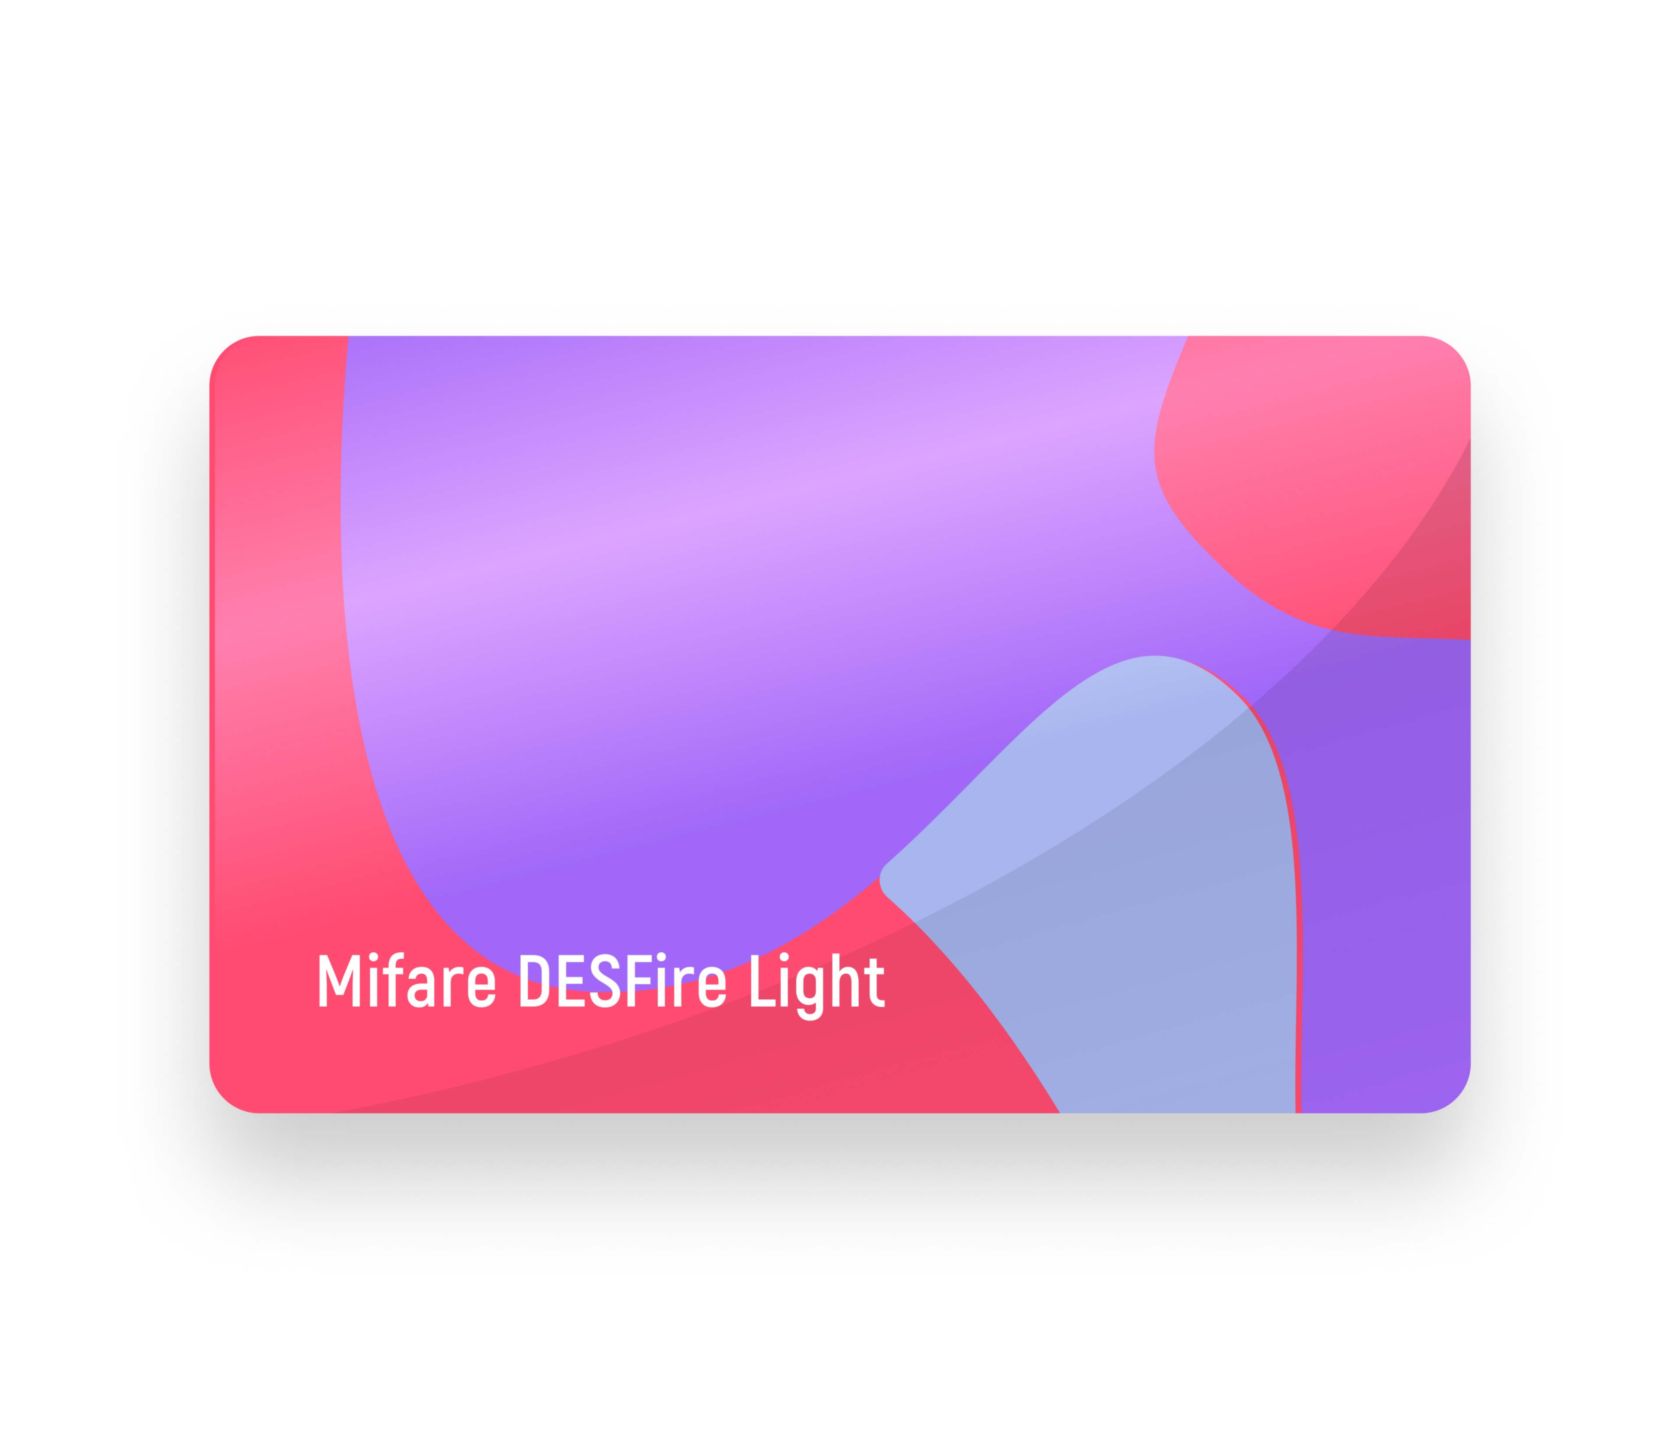 Mifare DESFire Light